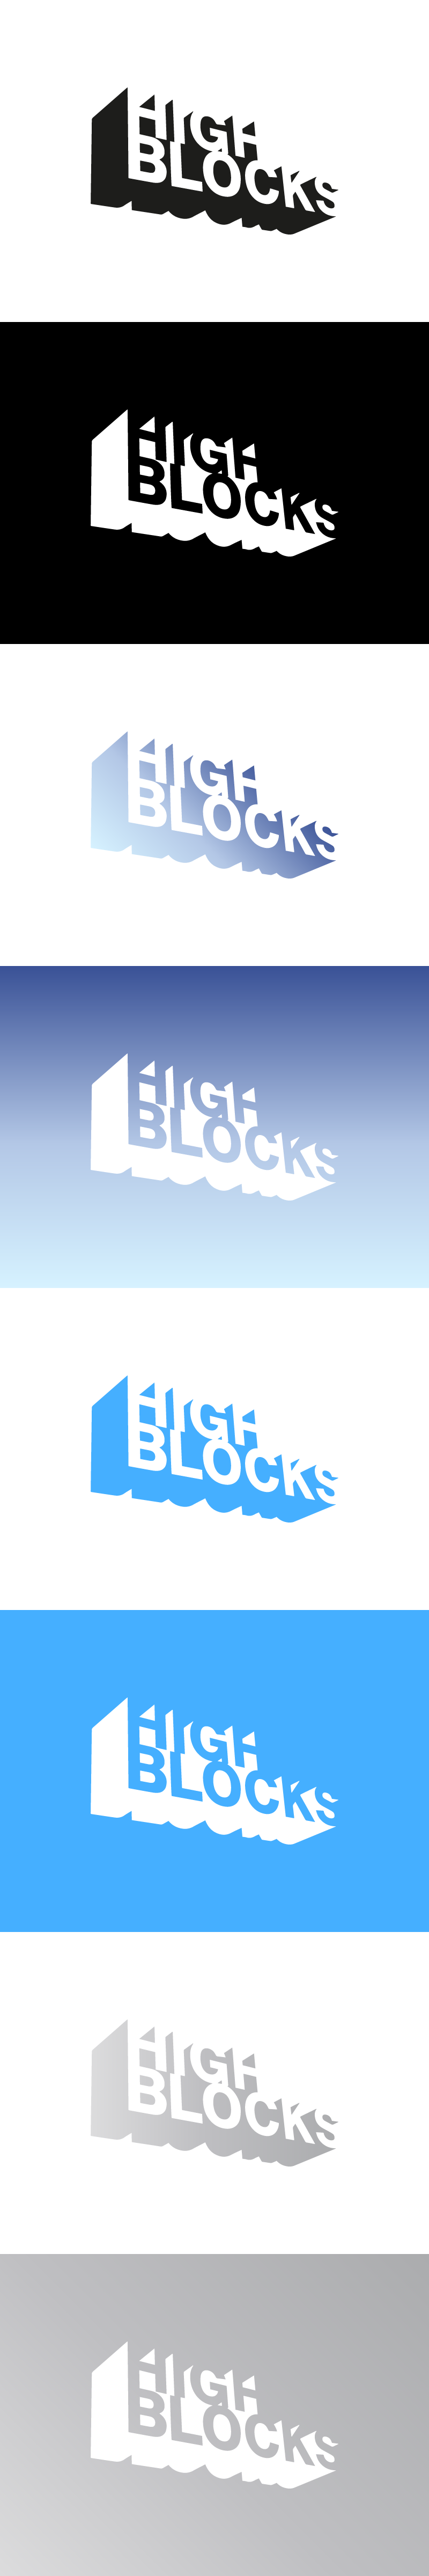 highblocks-variations.png